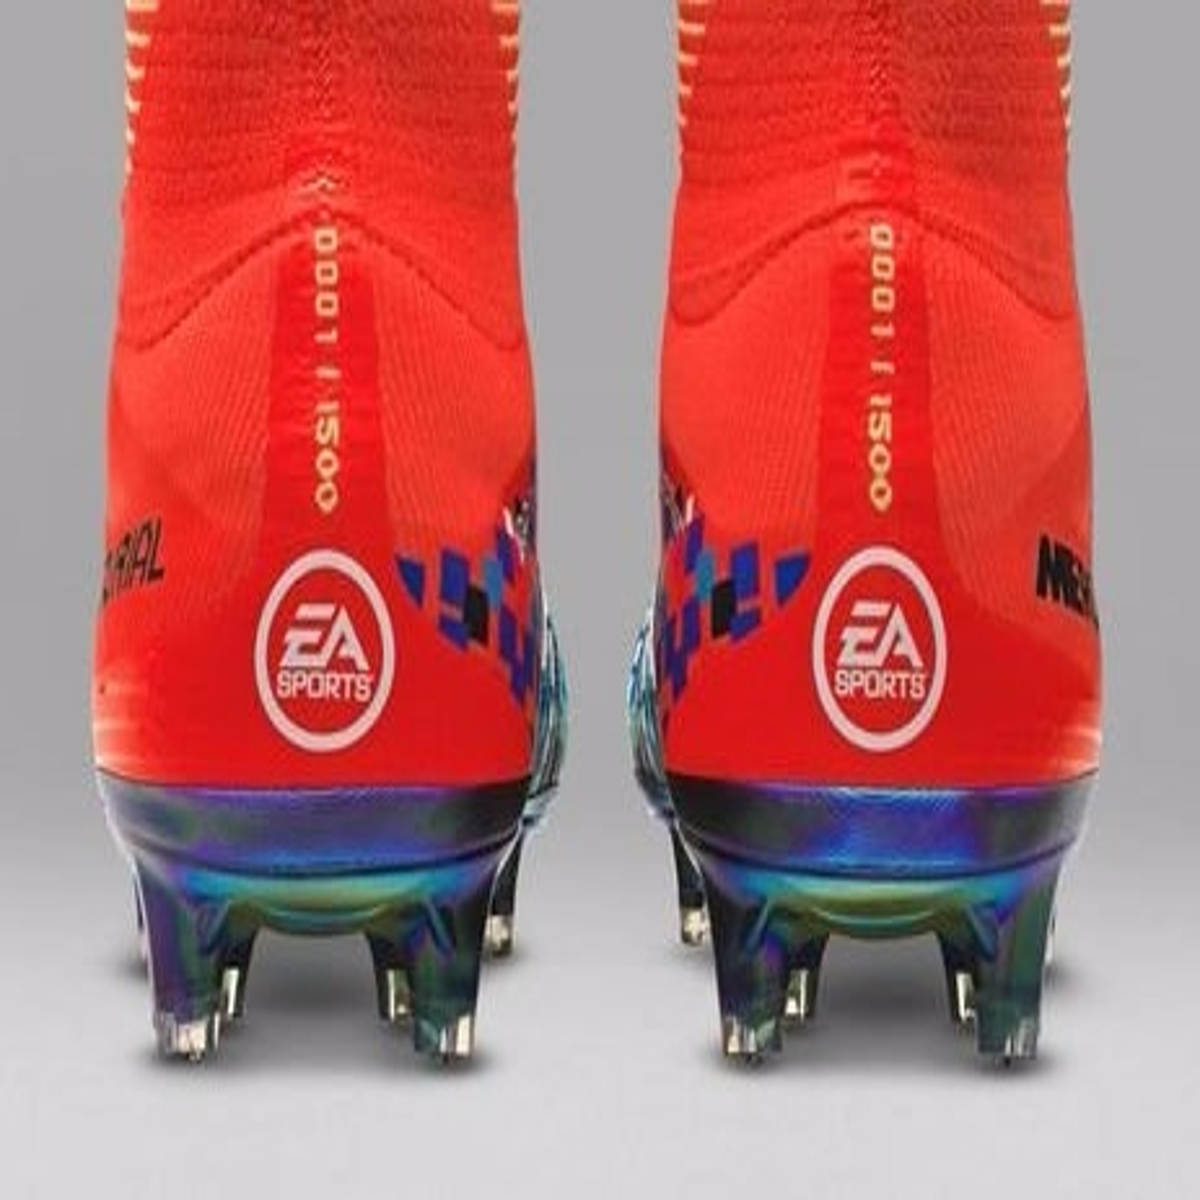 dinsdag Weggegooid Emuleren Nike en EA Sports werken samen aan voetbalschoenen | Eurogamer.nl